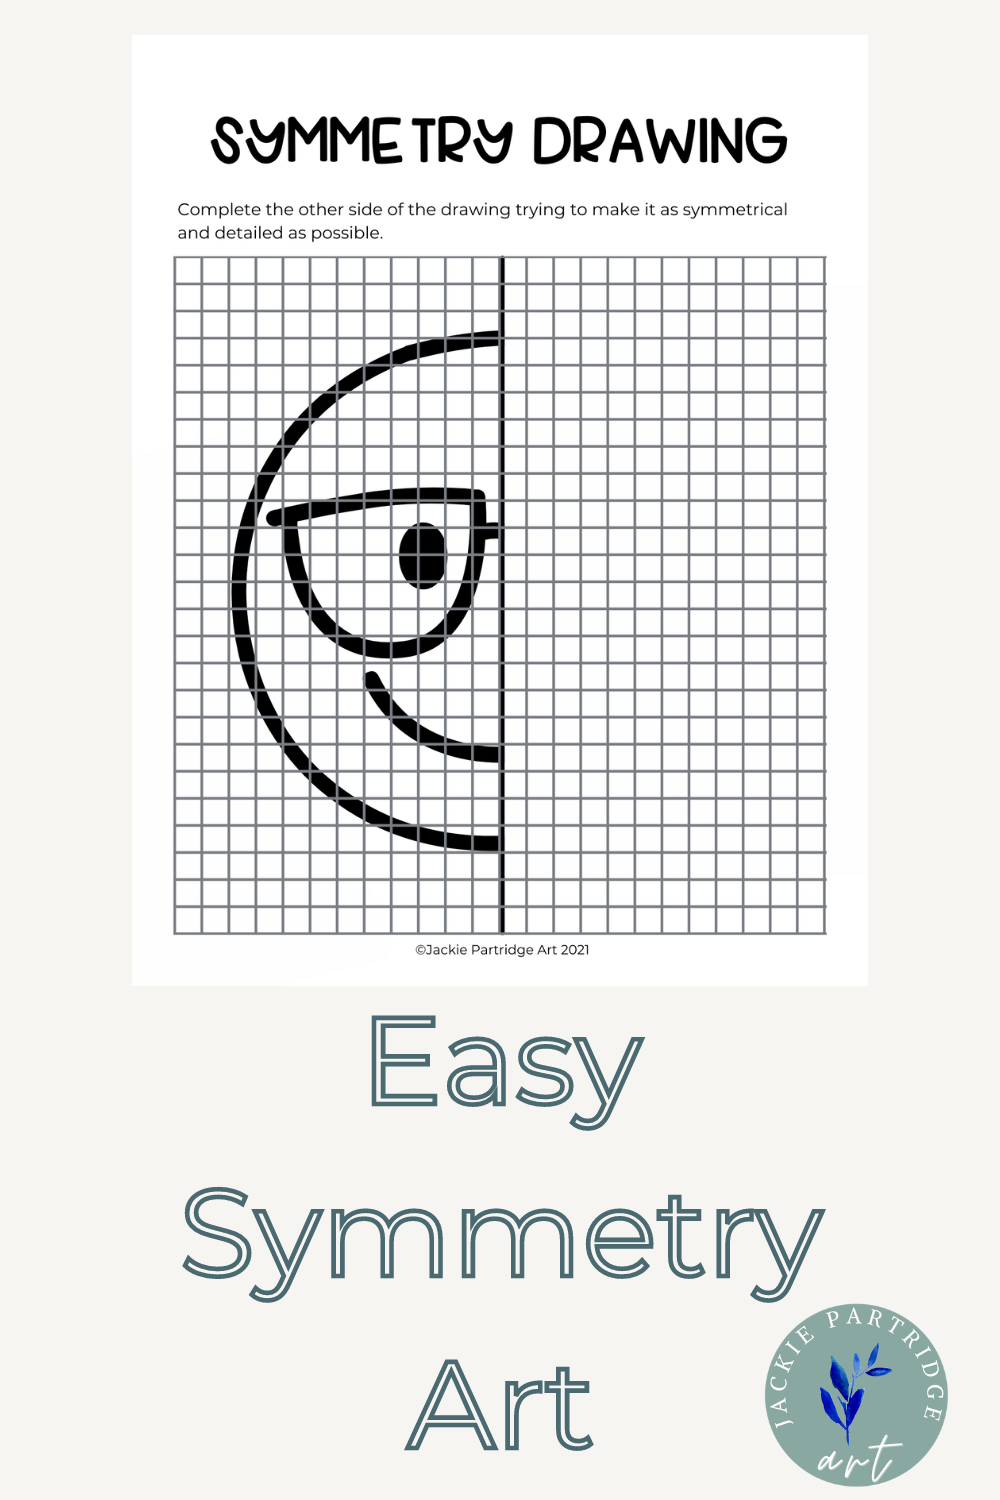 Symmetry drawing